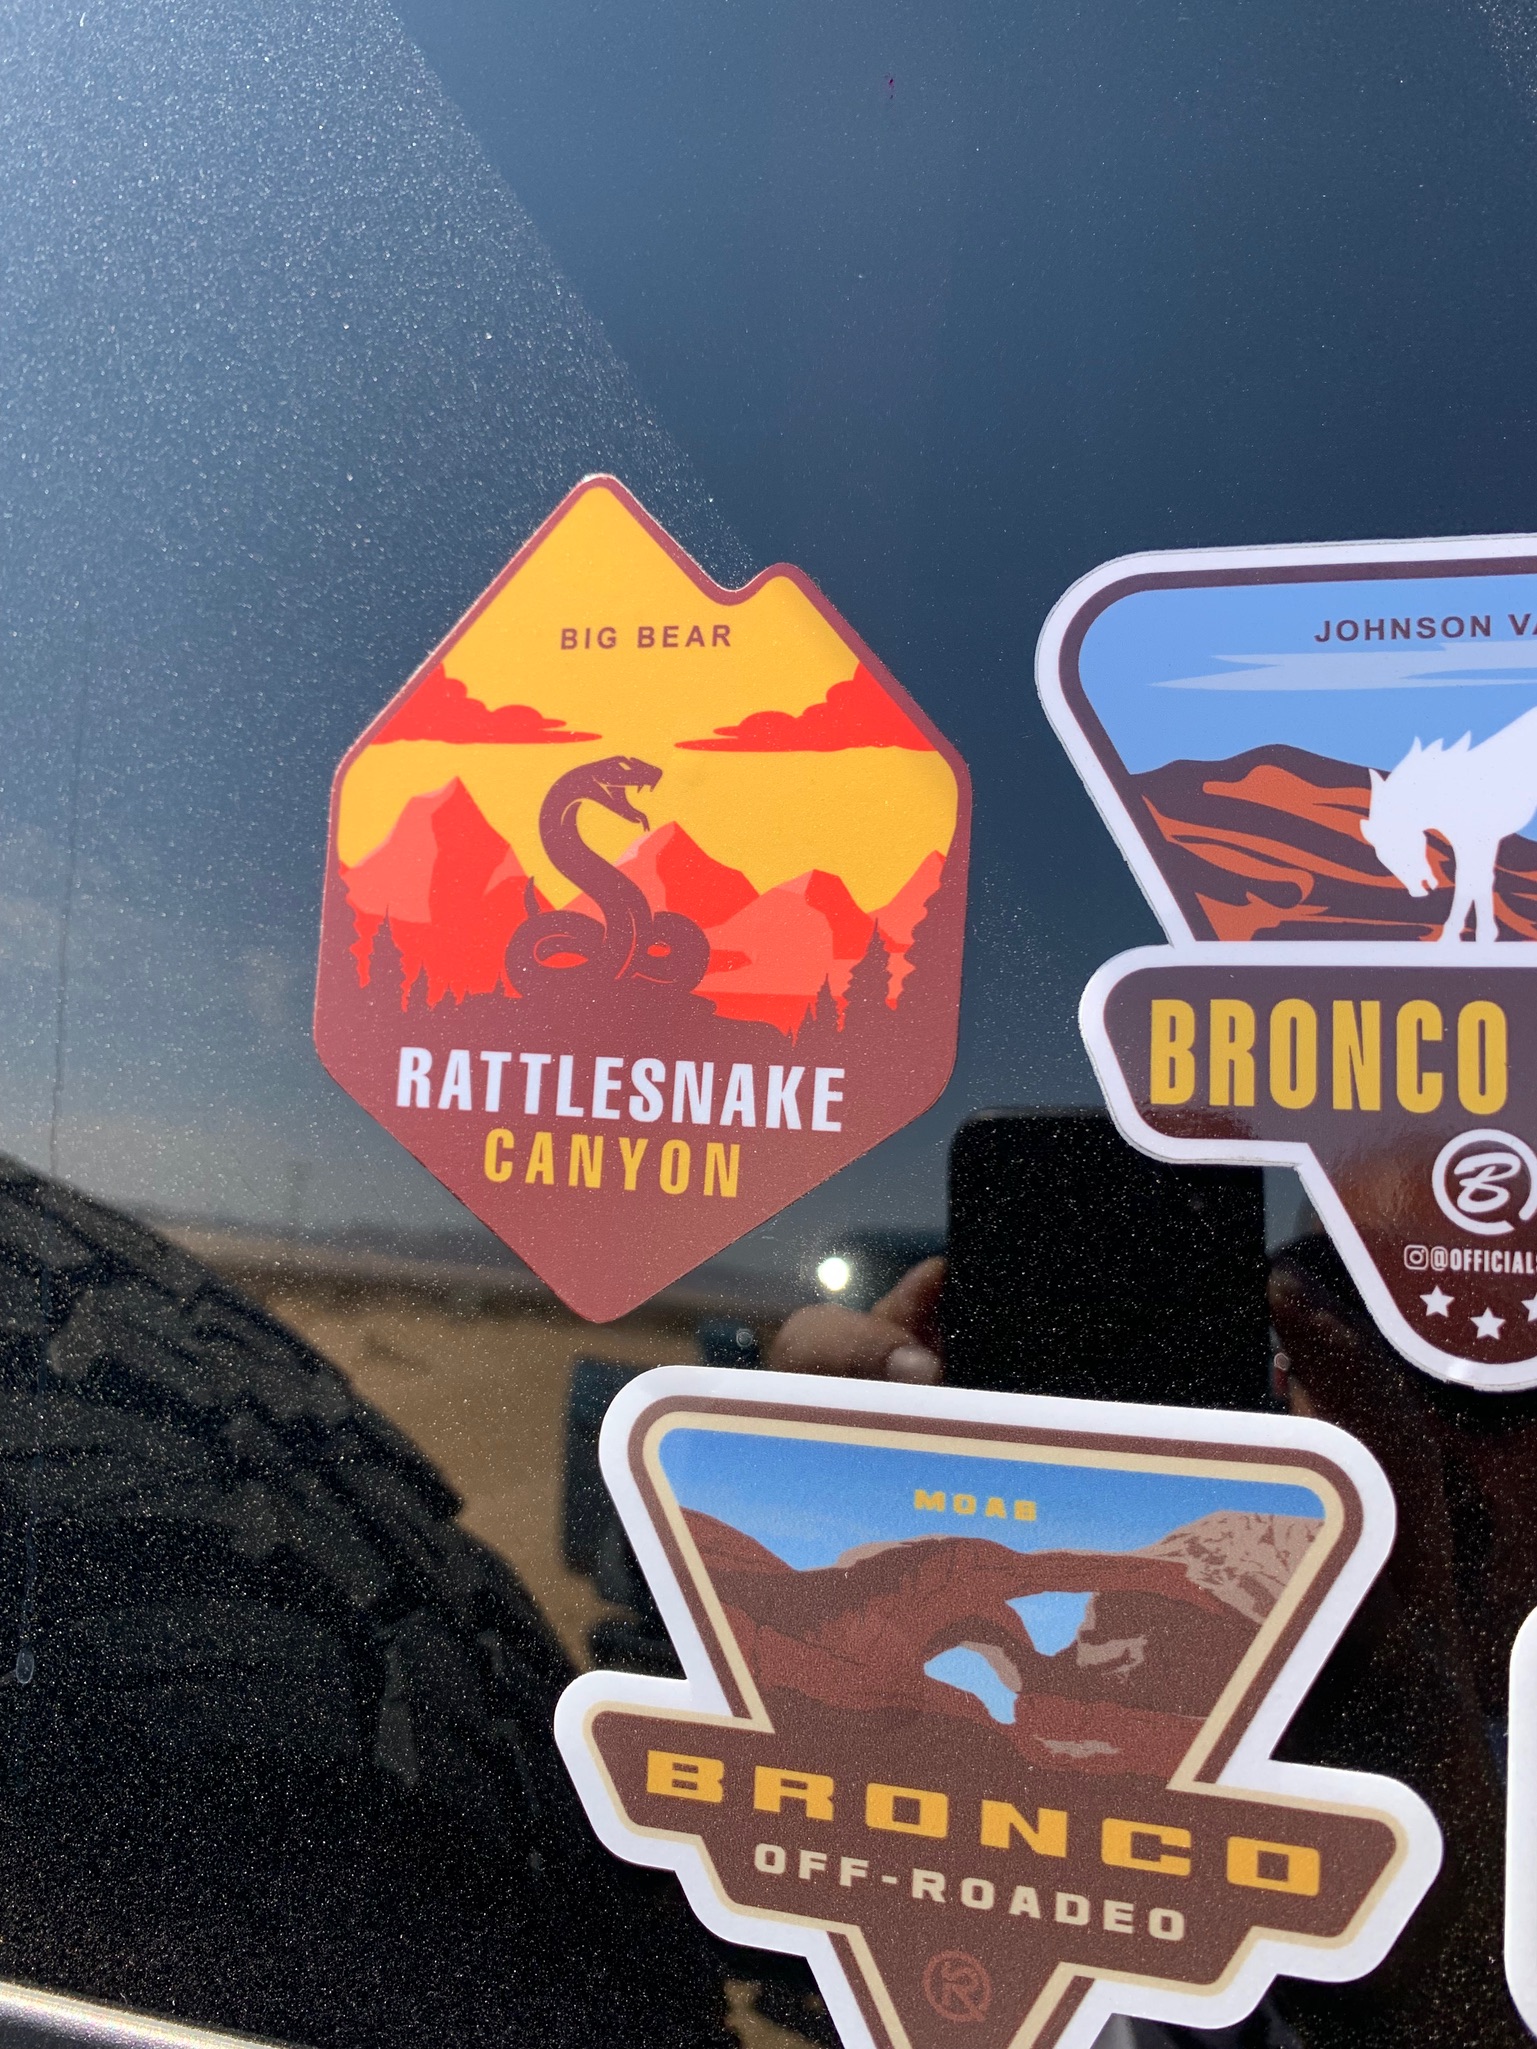 Ford Bronco Rattlesnake Canyon - Bronco Trail Meetup & Report IMG_1201